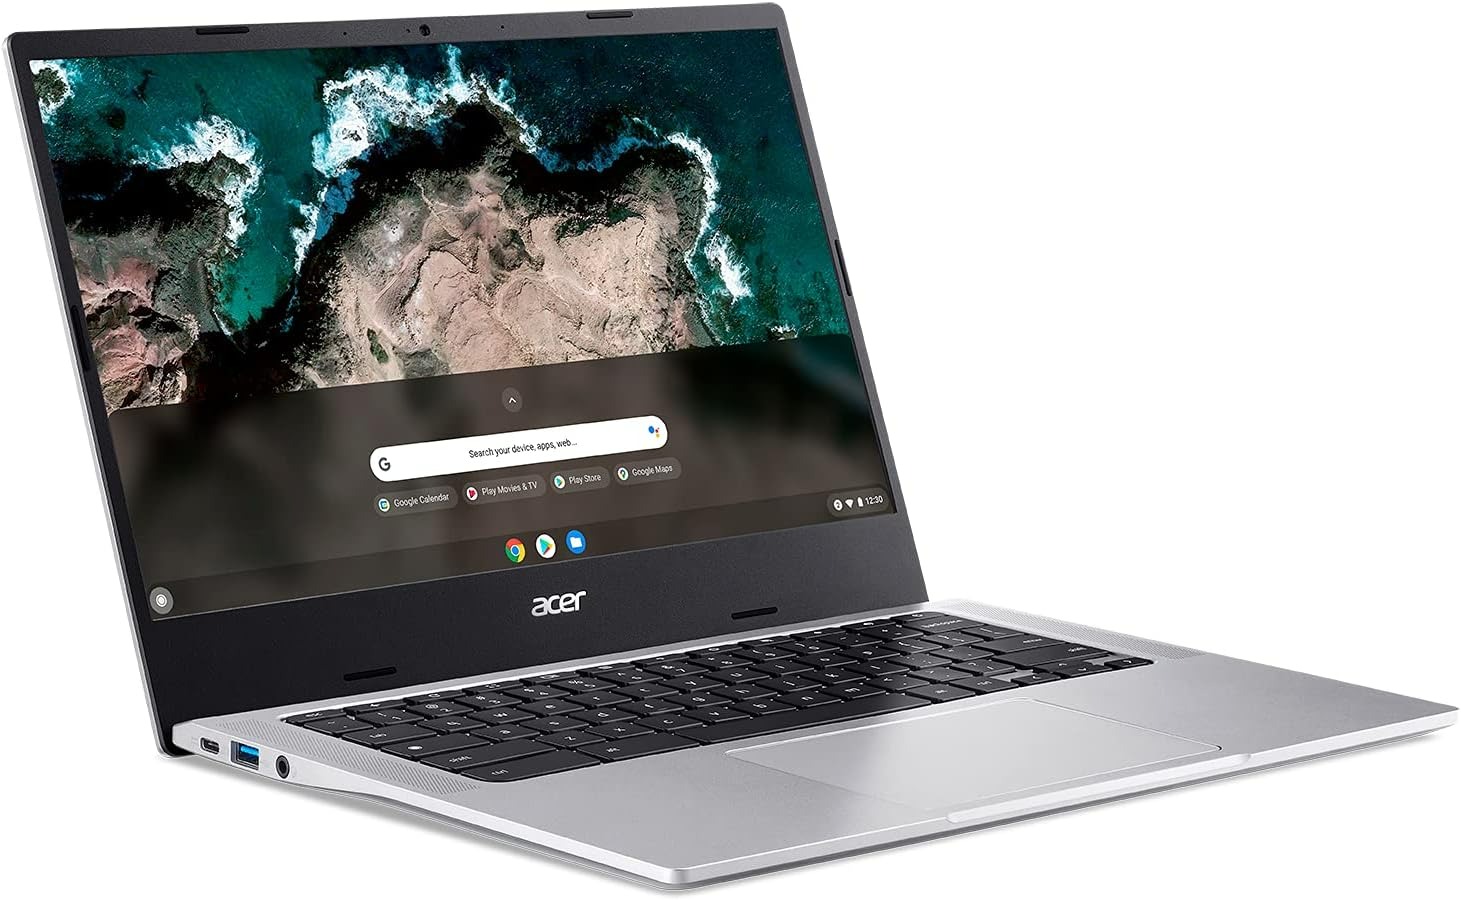 The Acer Chromebook.